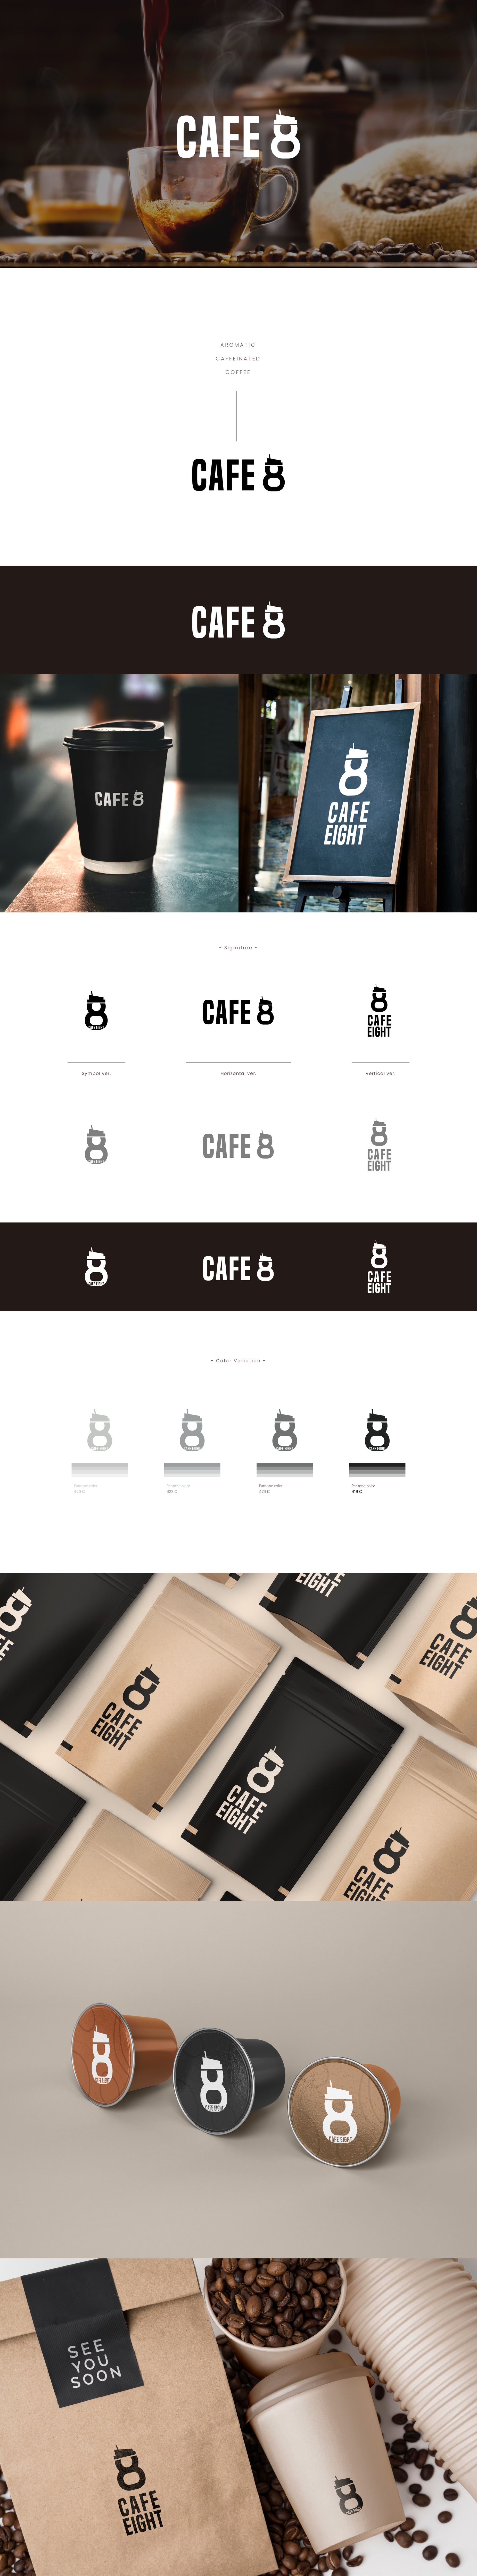 Cafe8_web-01